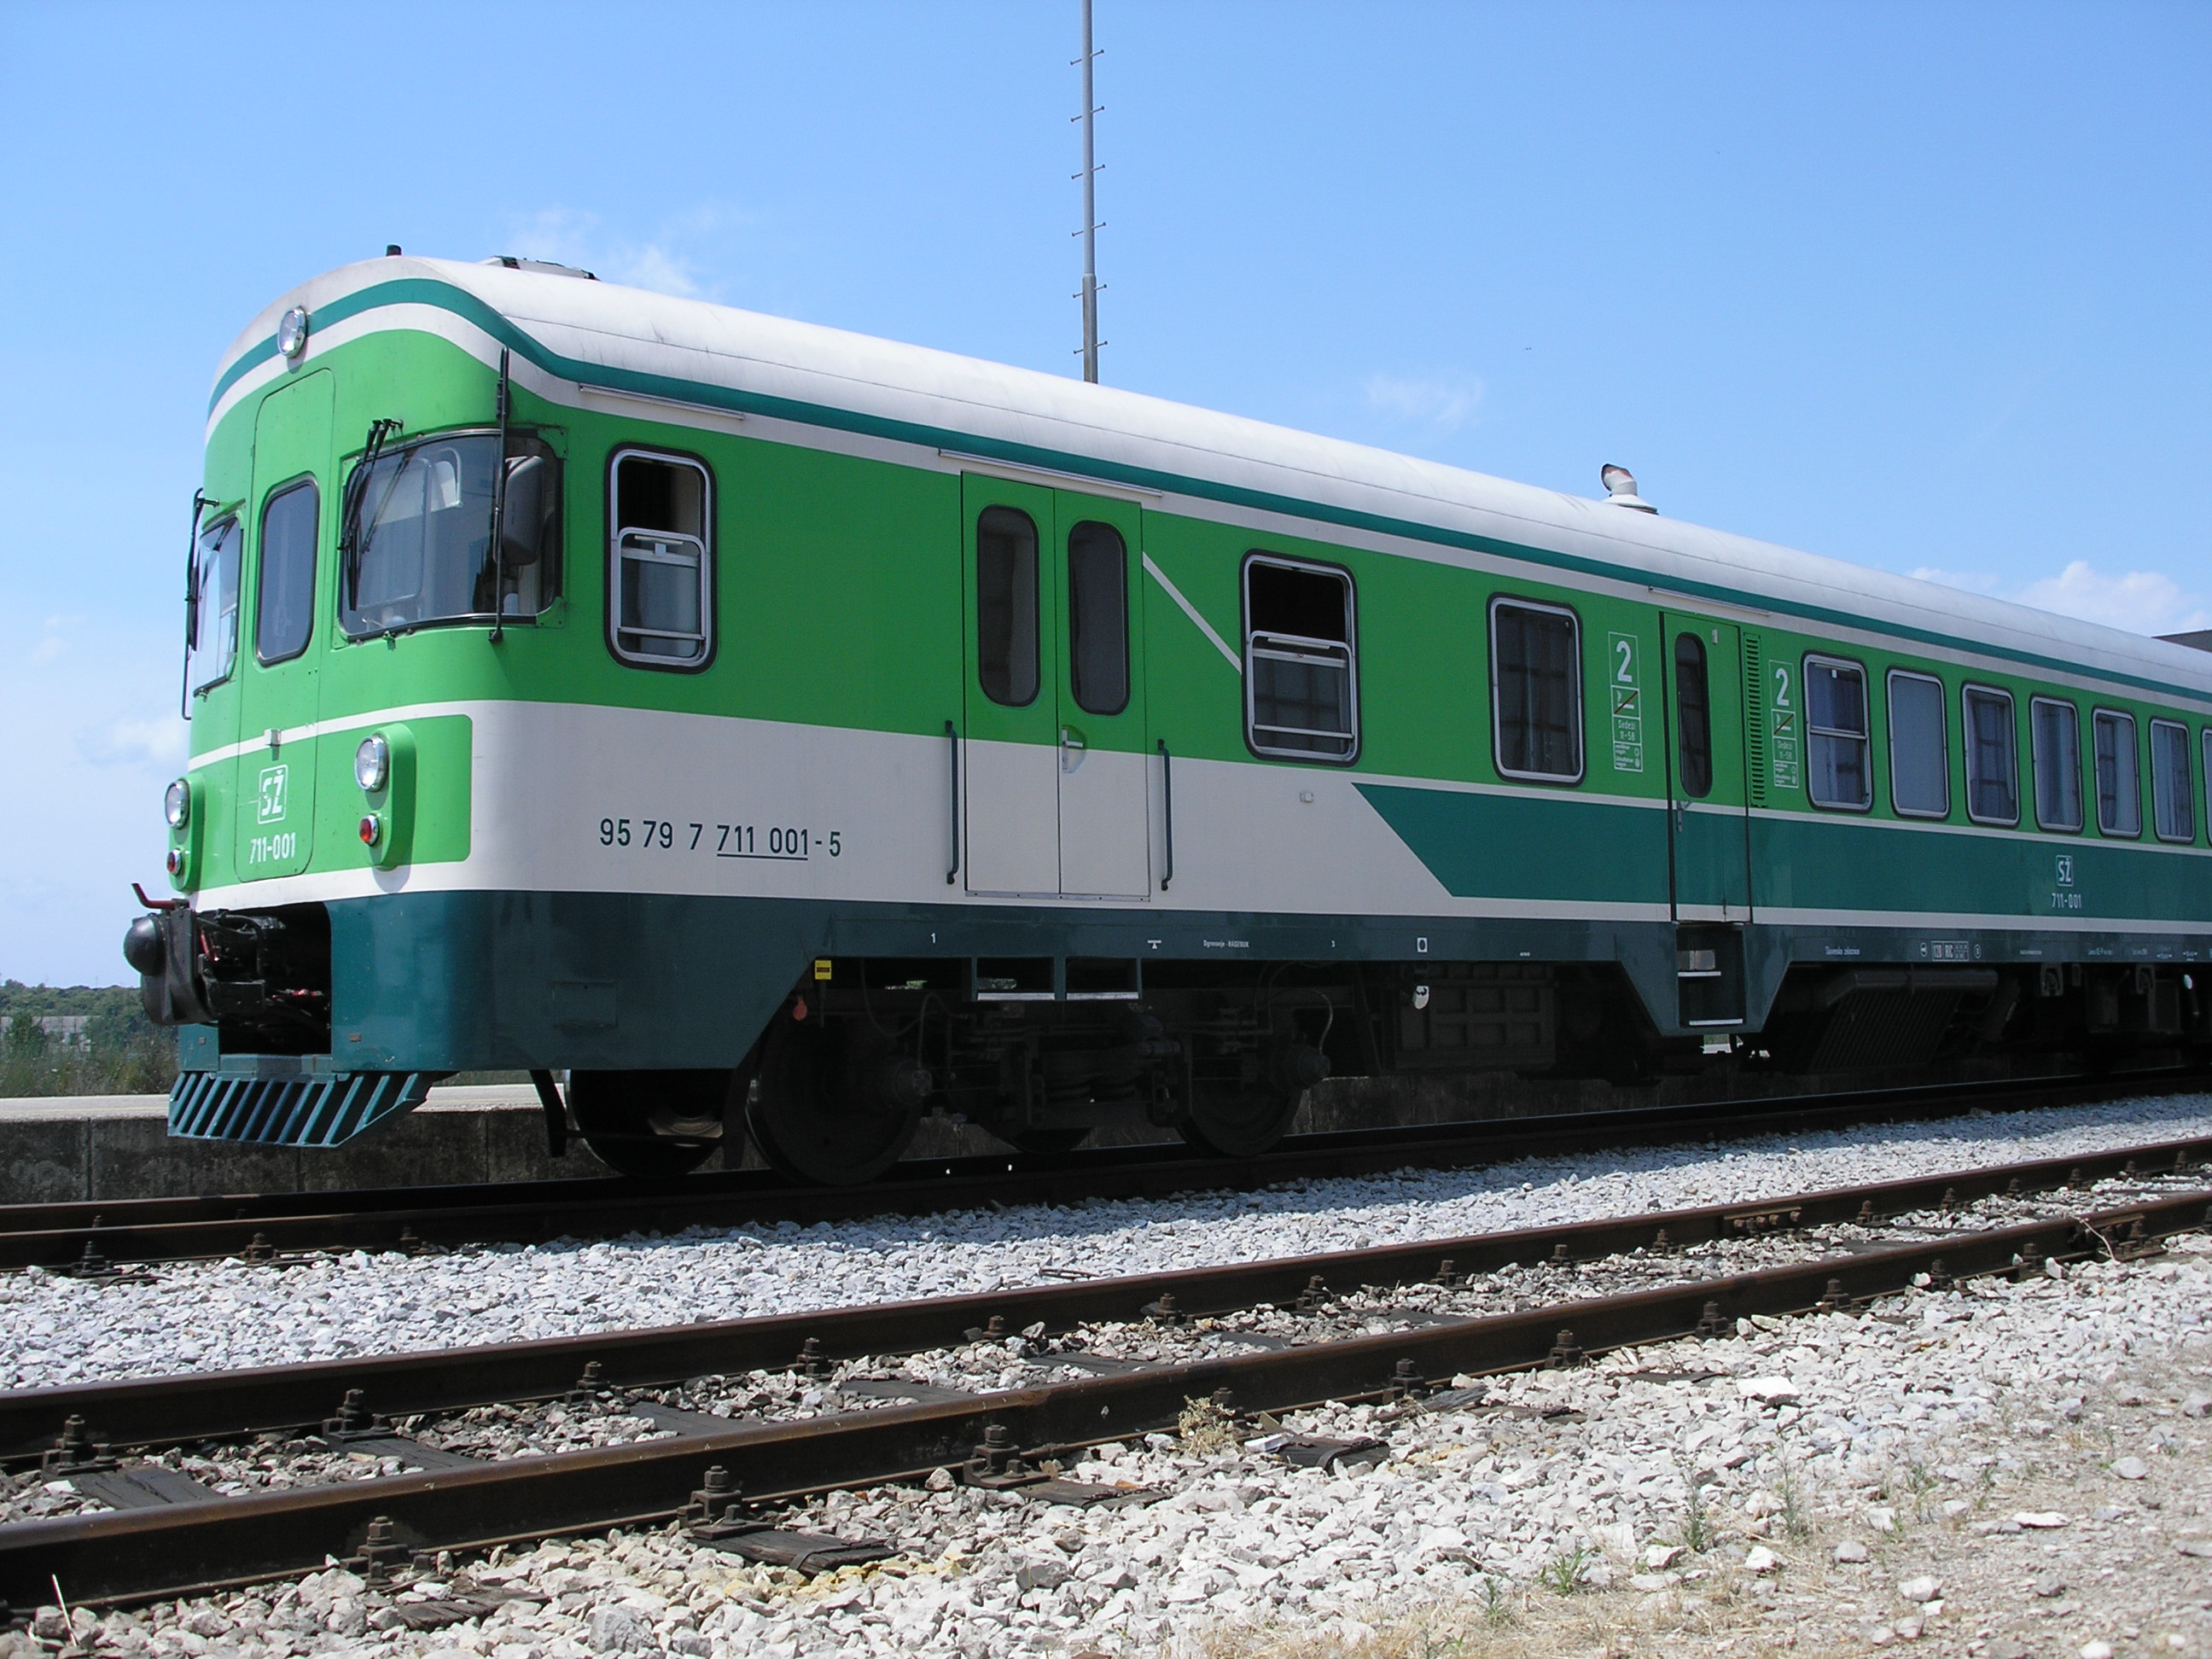 Sž series 711 train (green 01)